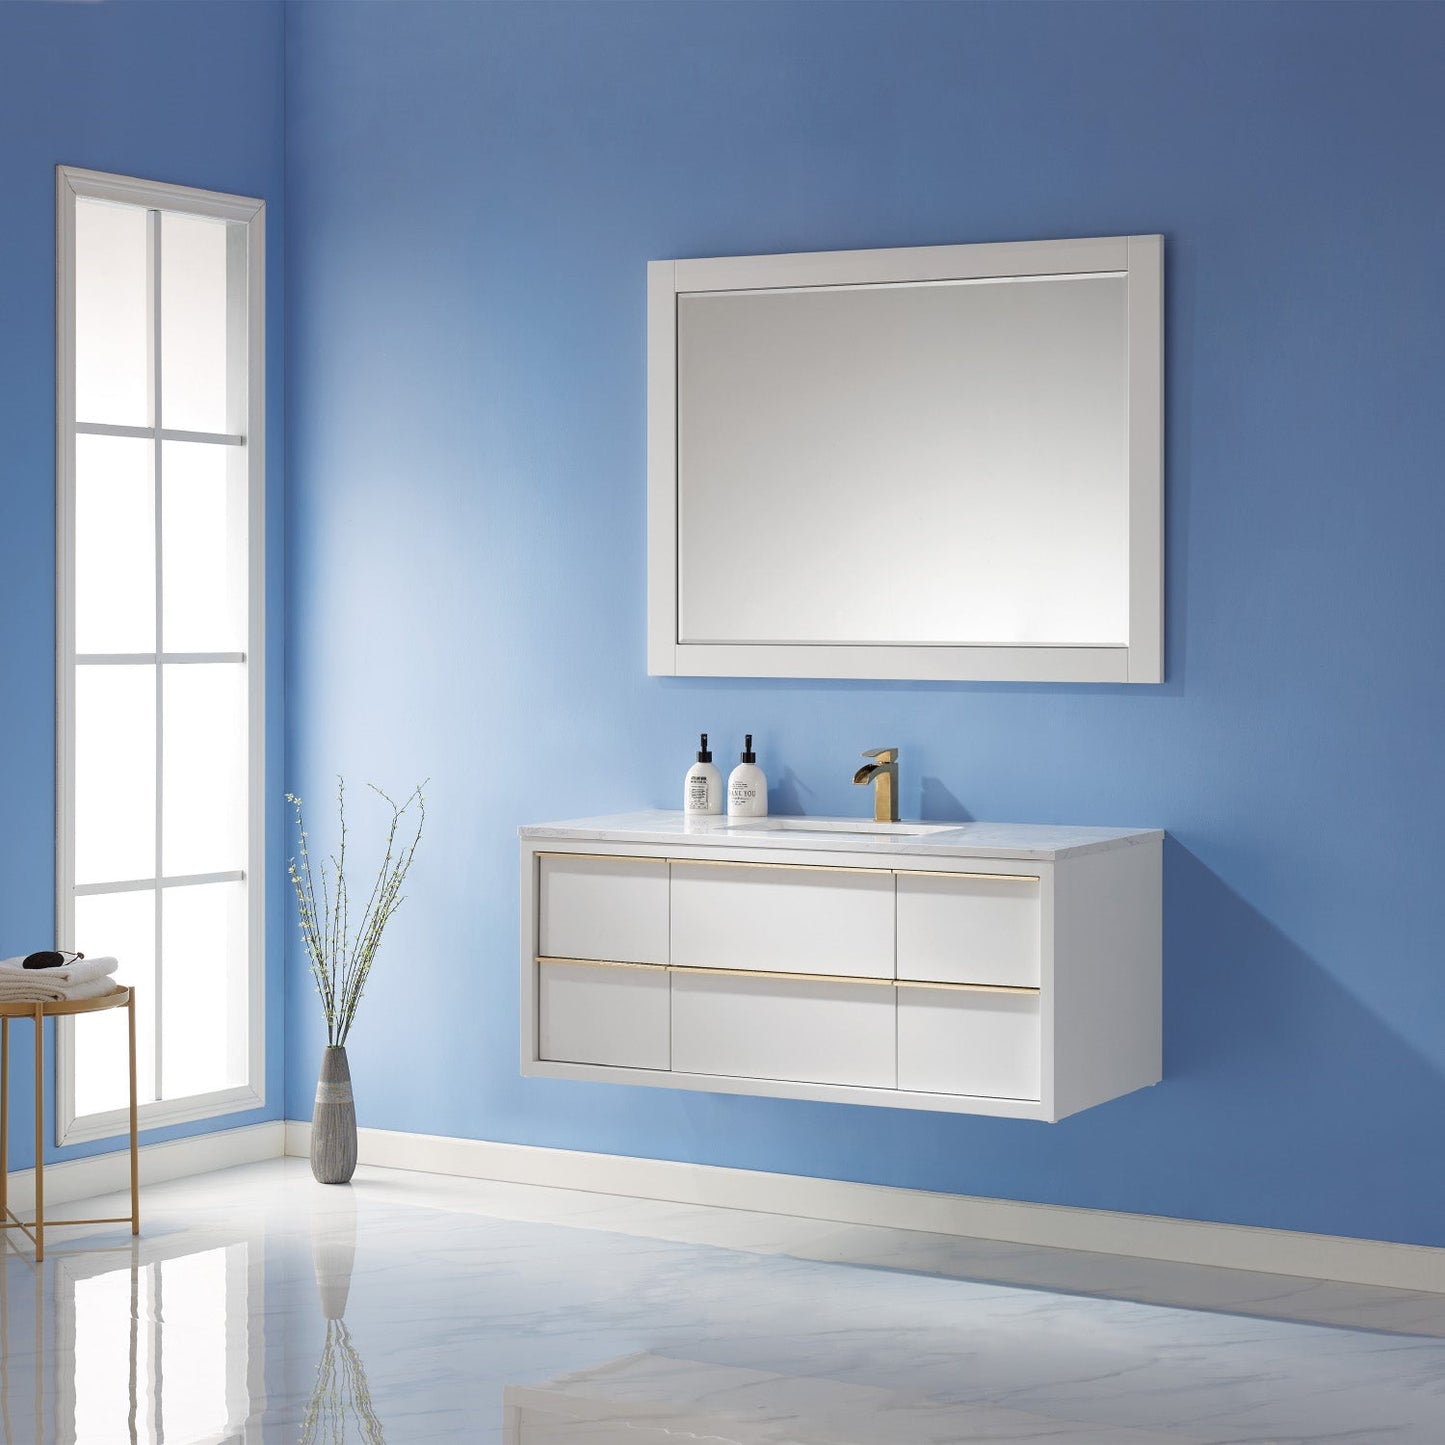 Morgan 48" Single Bathroom Vanity Set in White and Aosta White Composite Stone Countertop with Mirror